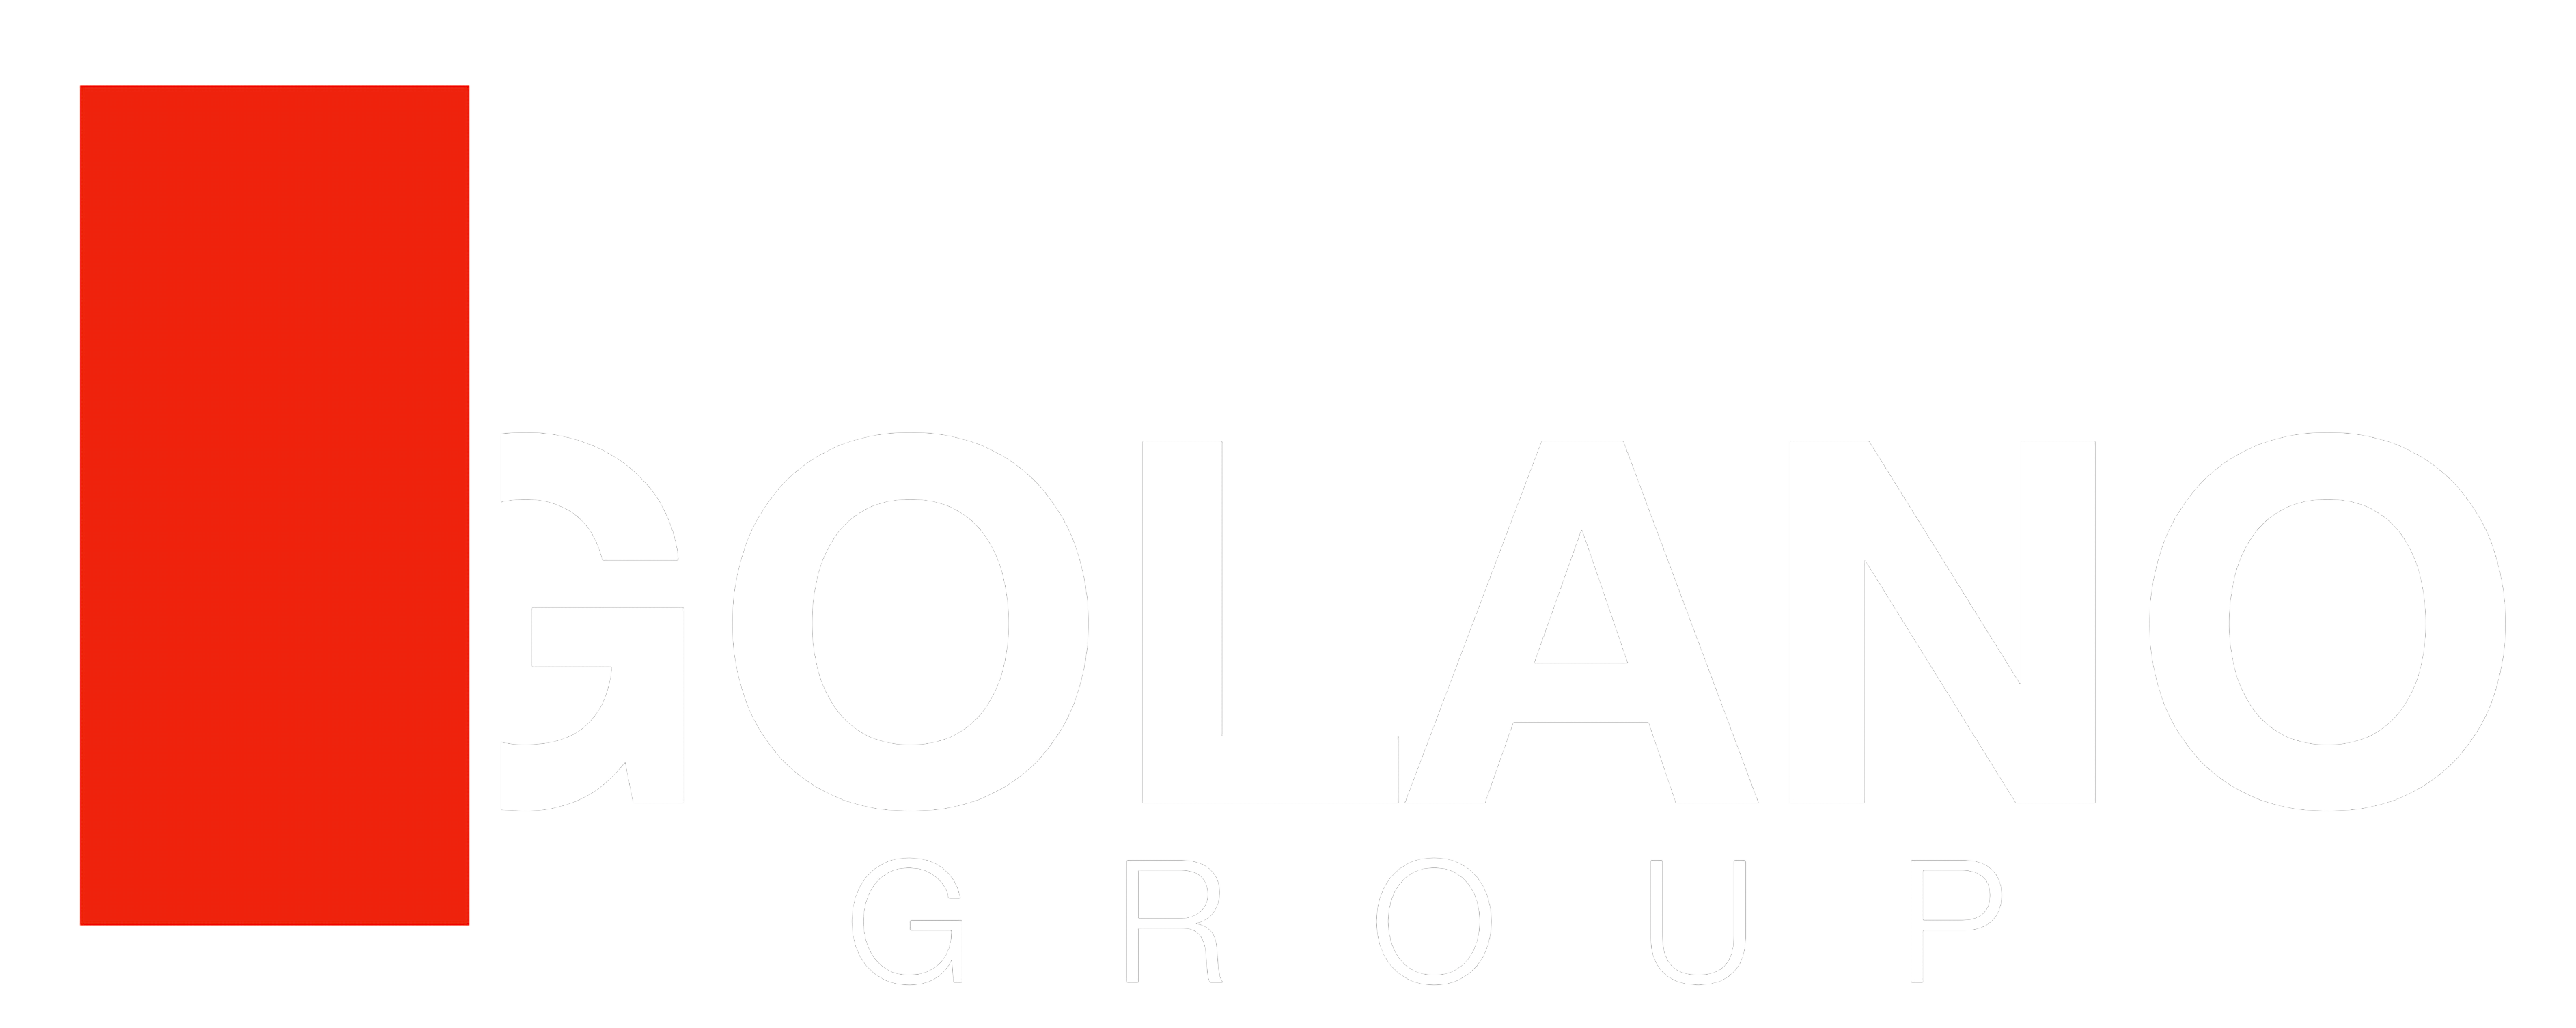 Golano Group